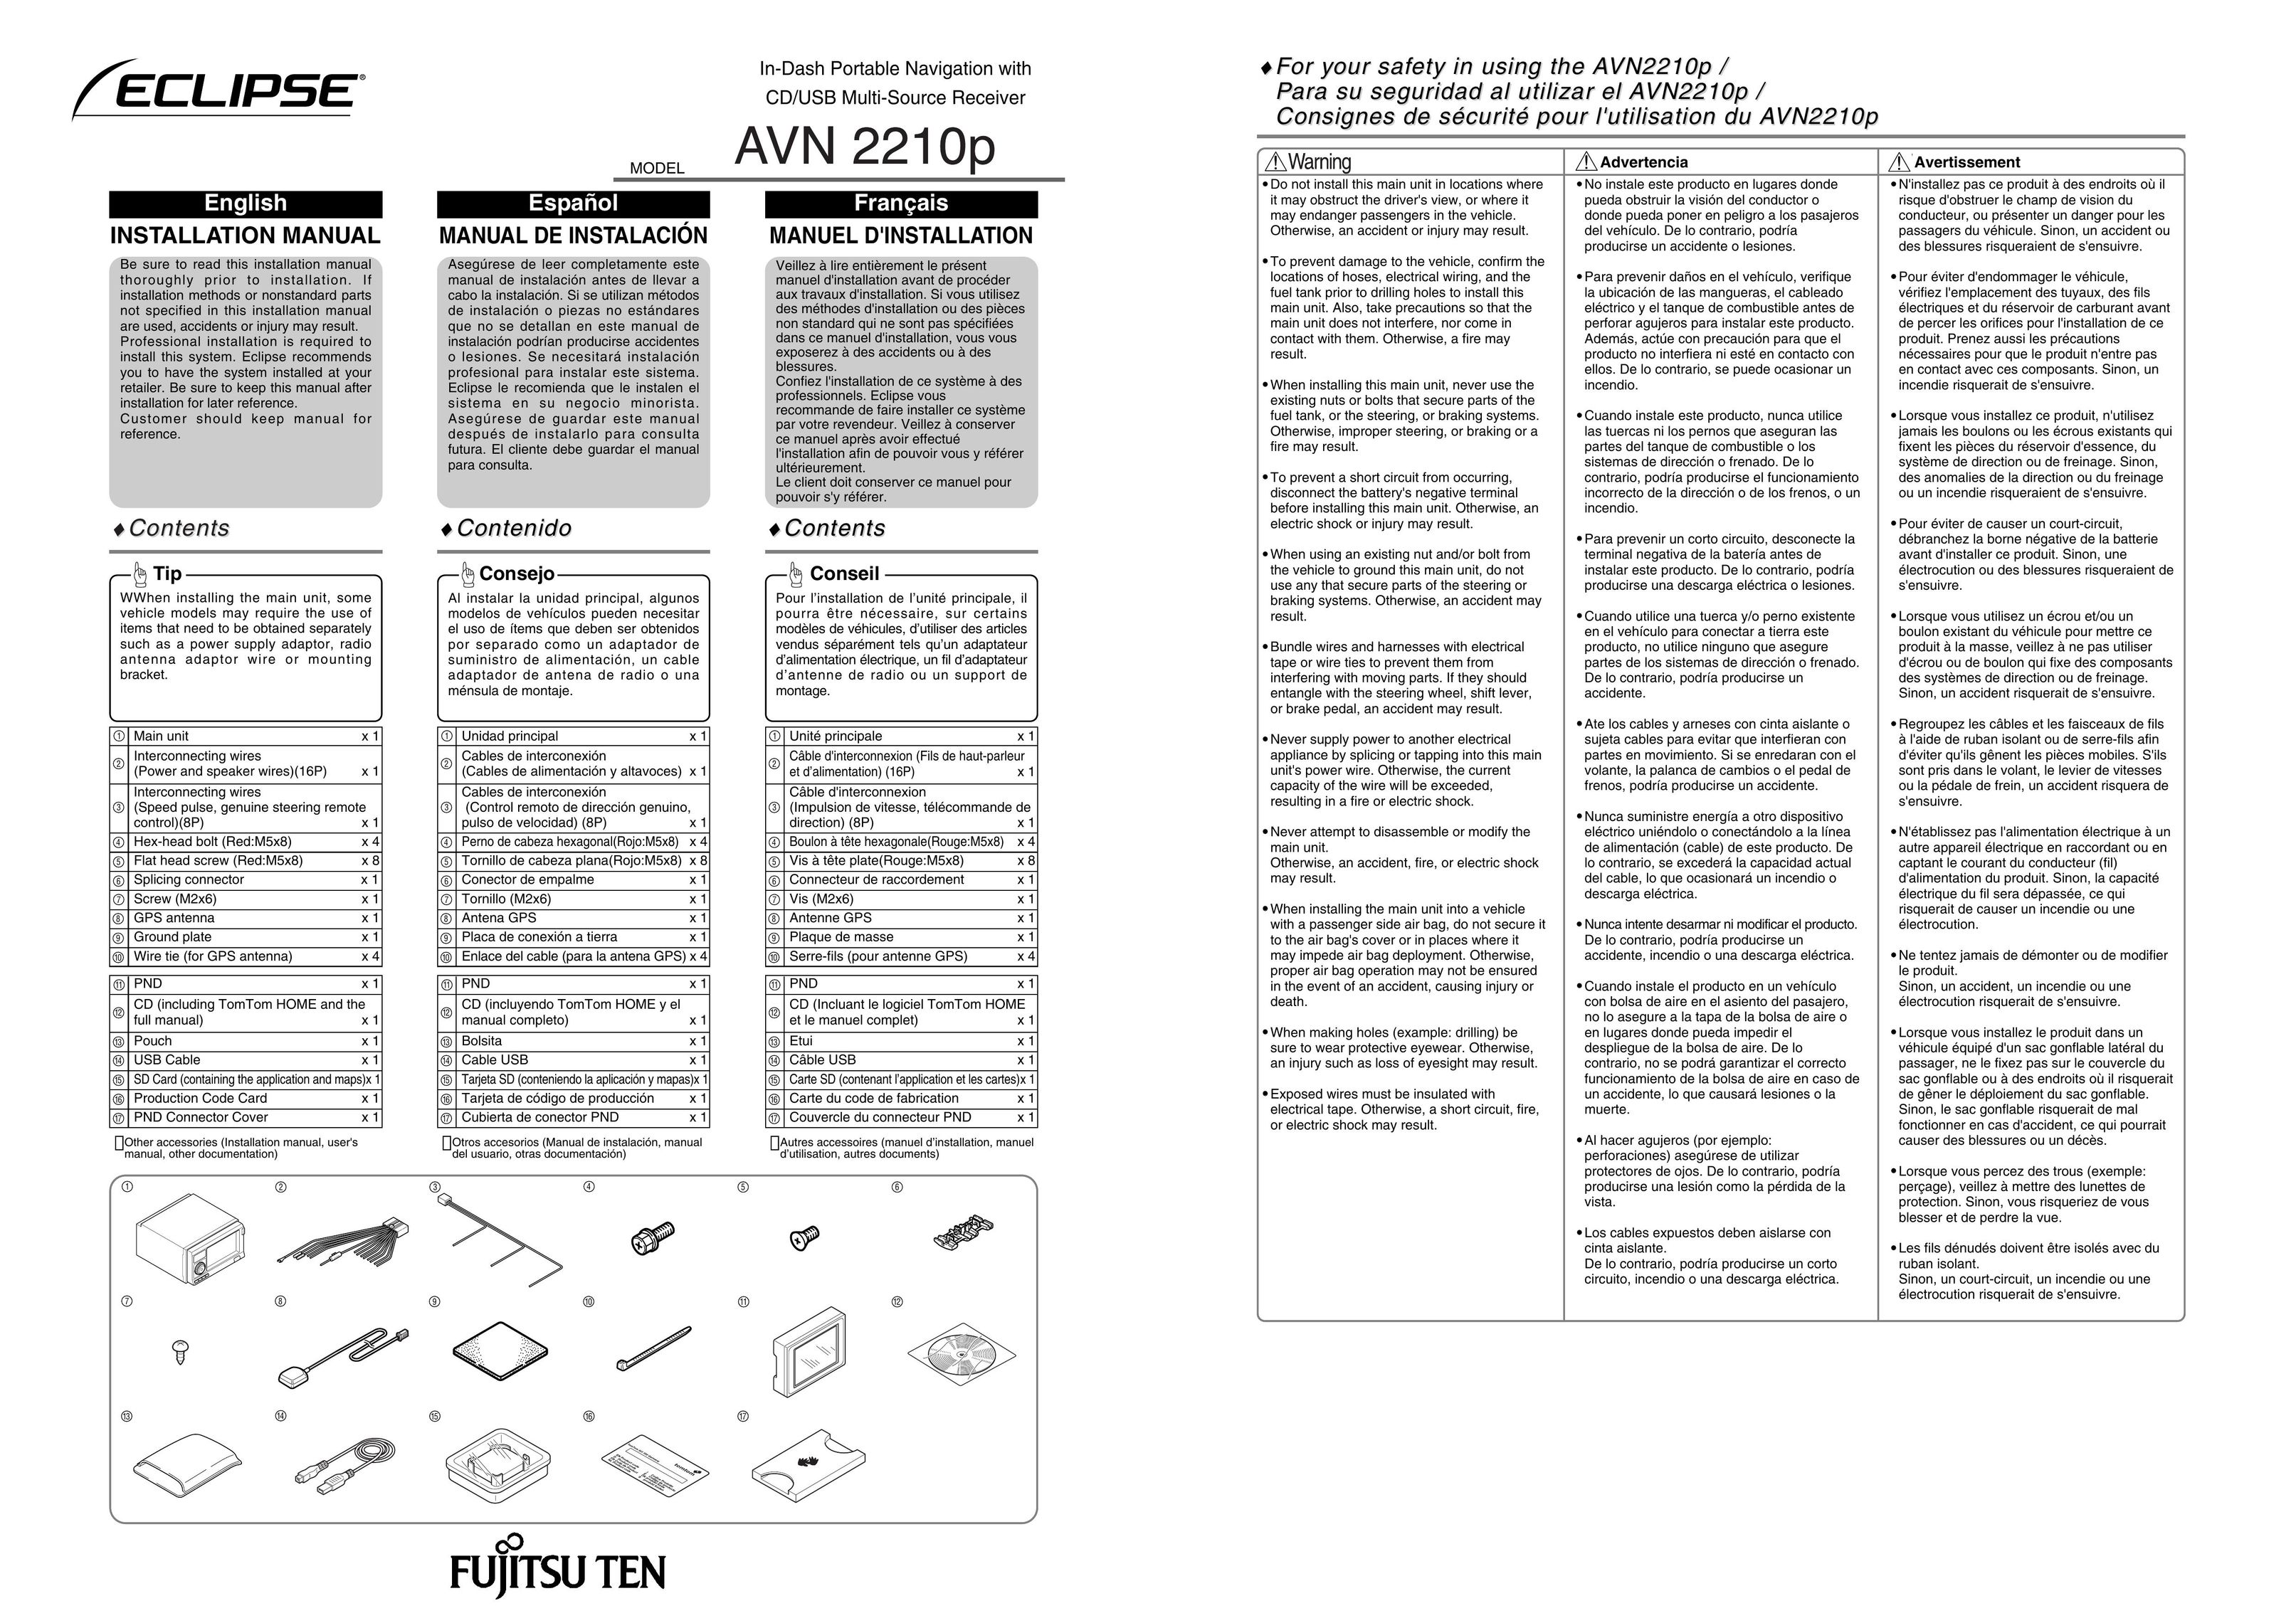 Eclipse - Fujitsu Ten AVN 2210P MP3 Docking Station User Manual